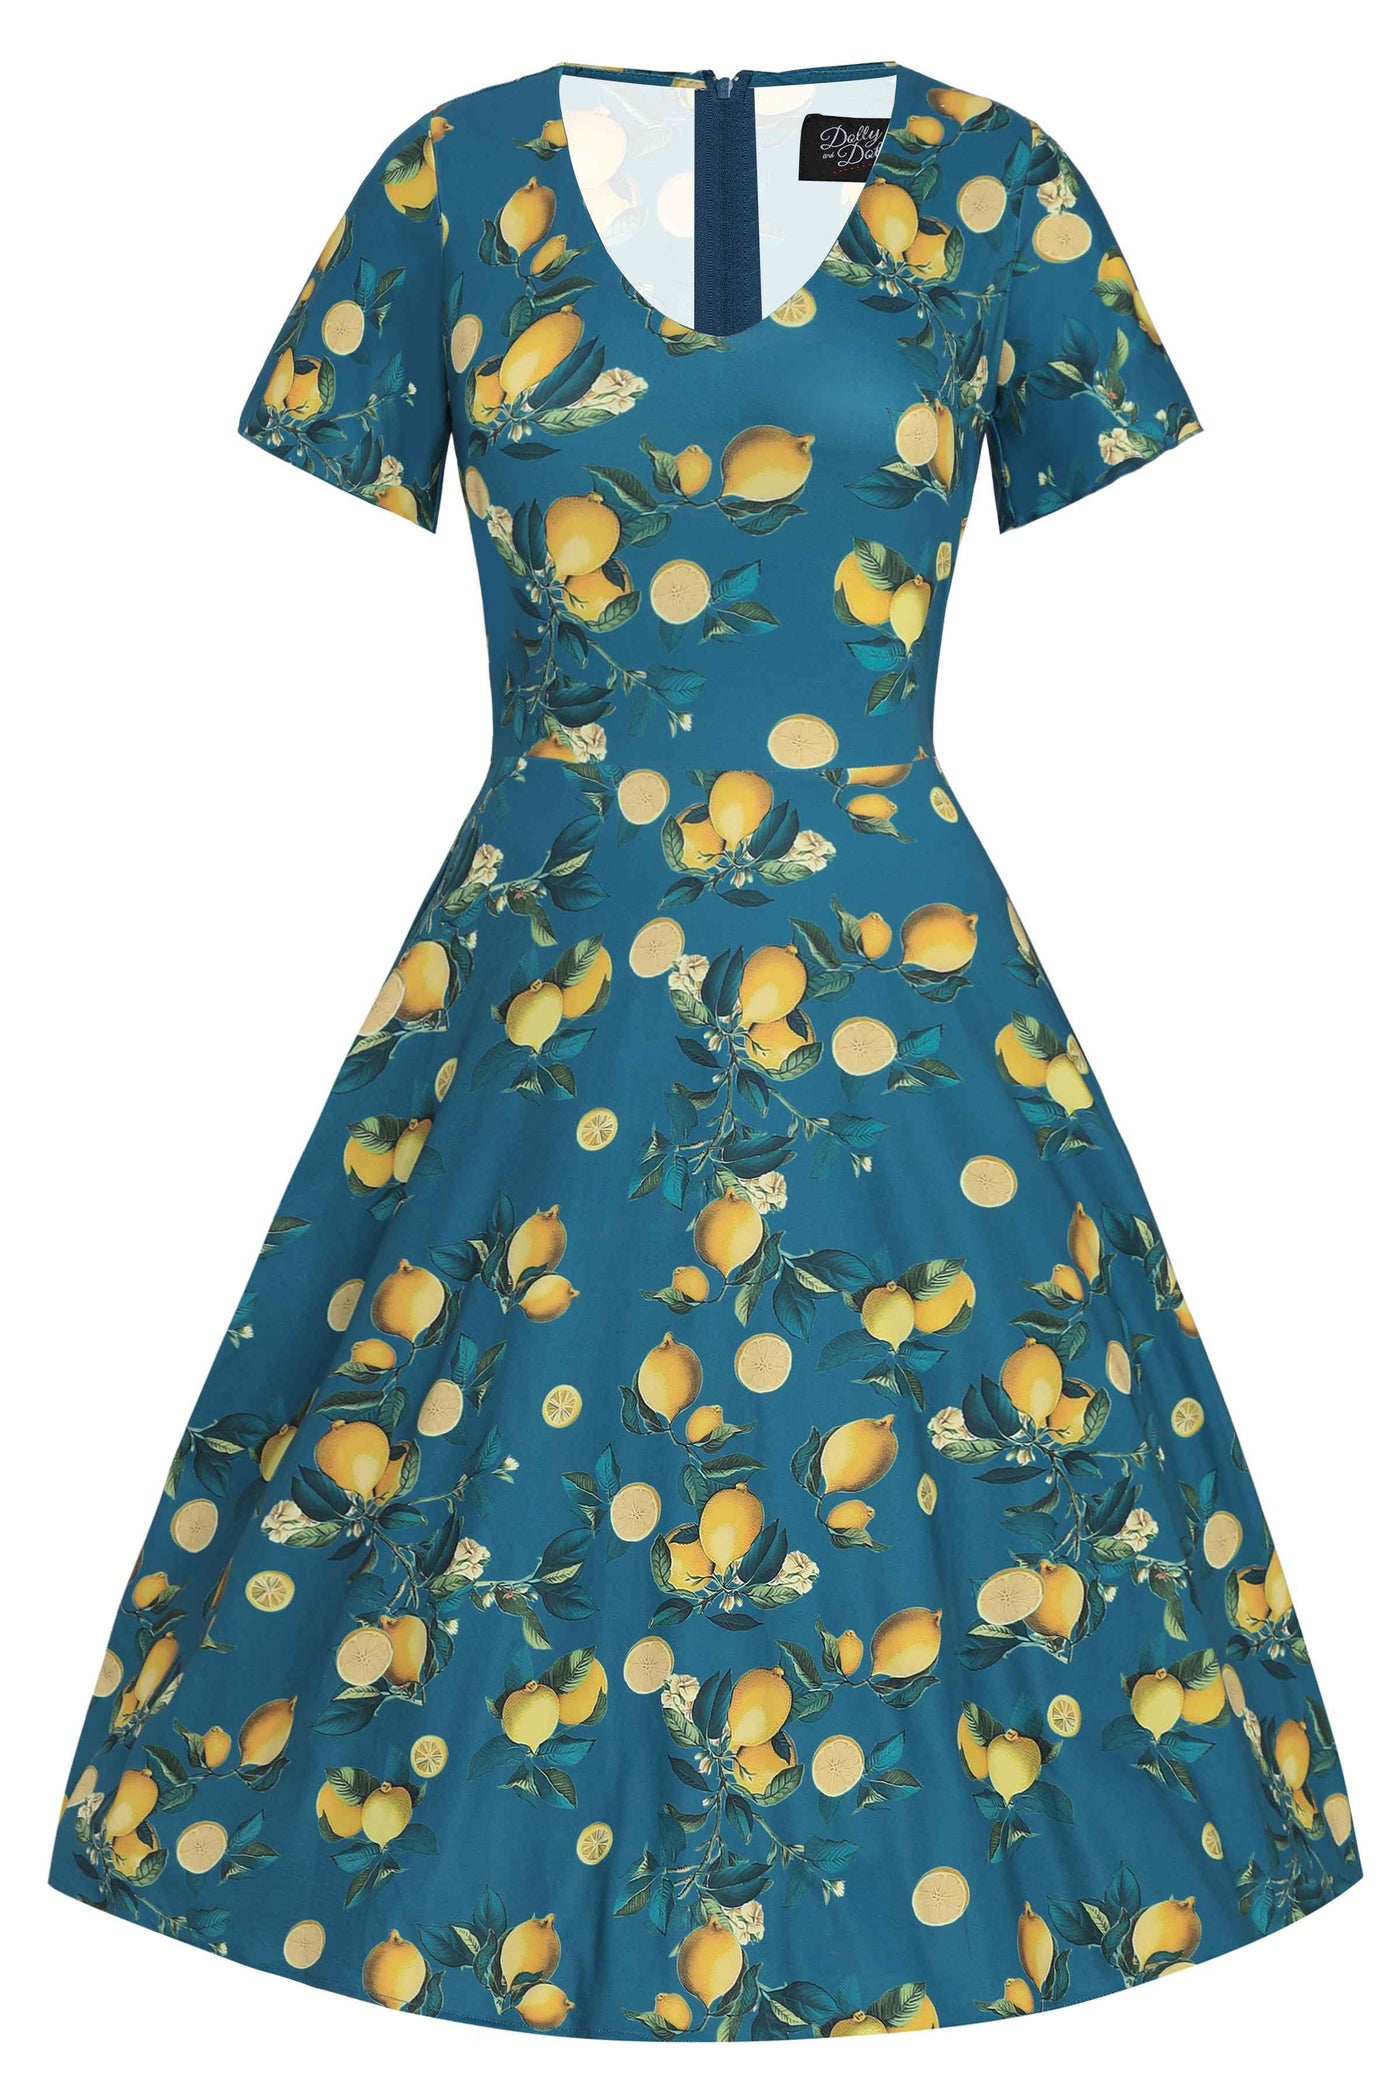 Palma Short Sleeved Tea Dress in Teal Blue Lemon Print